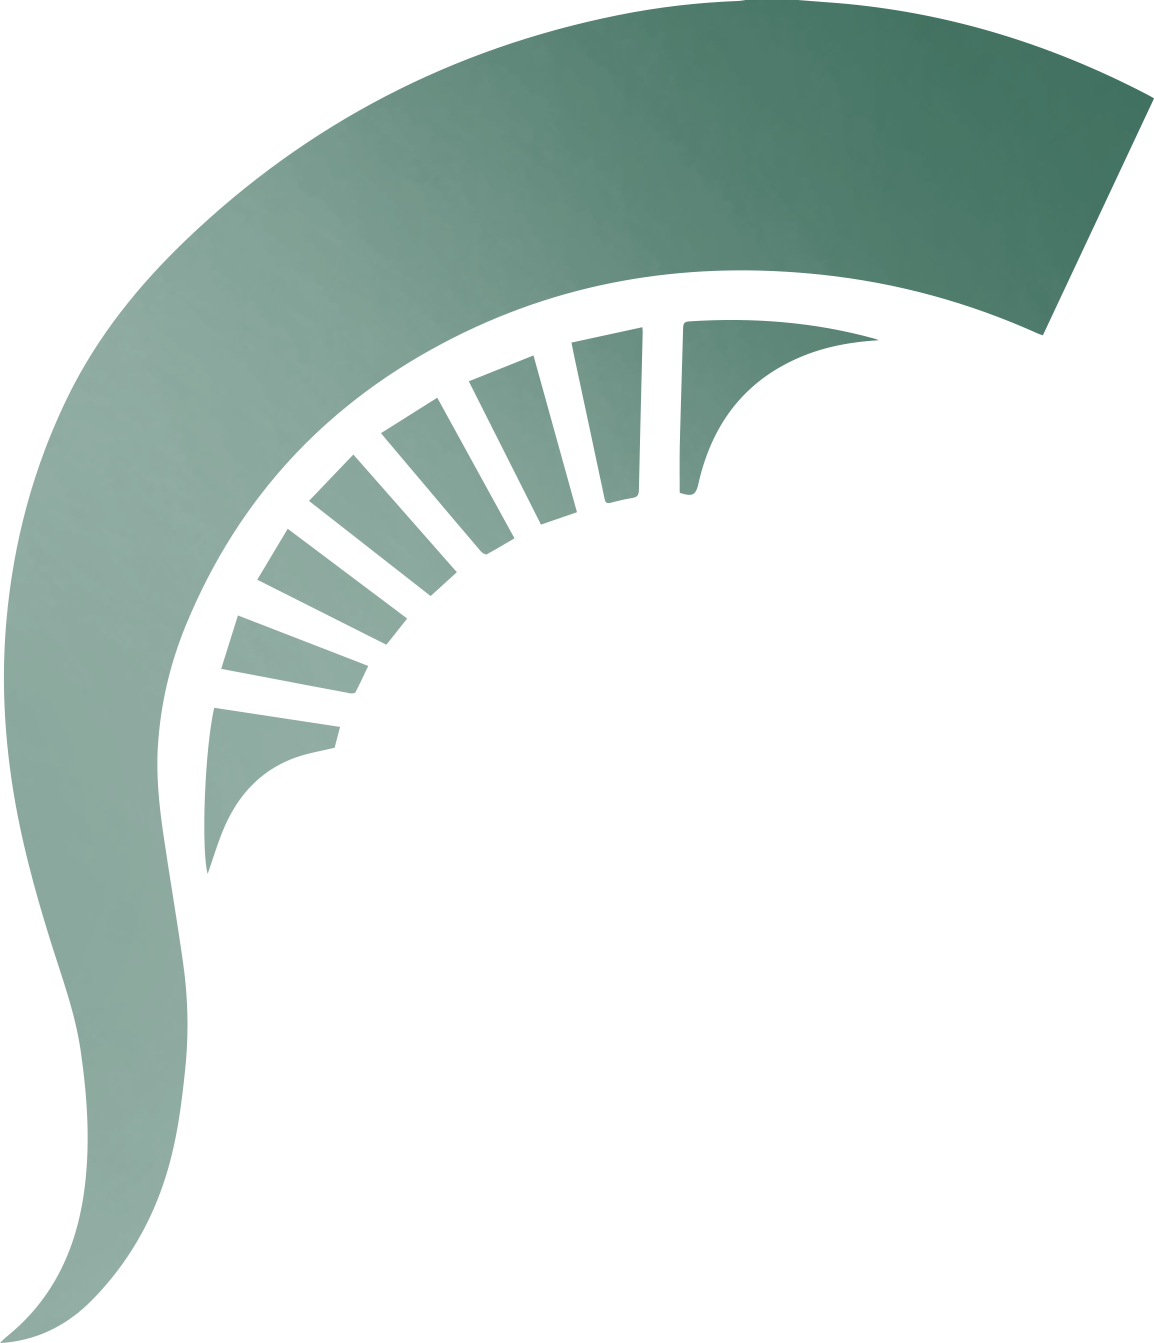 MSU Spartan Logo - Design and Visual Identity | The MSU Brand | Michigan State University